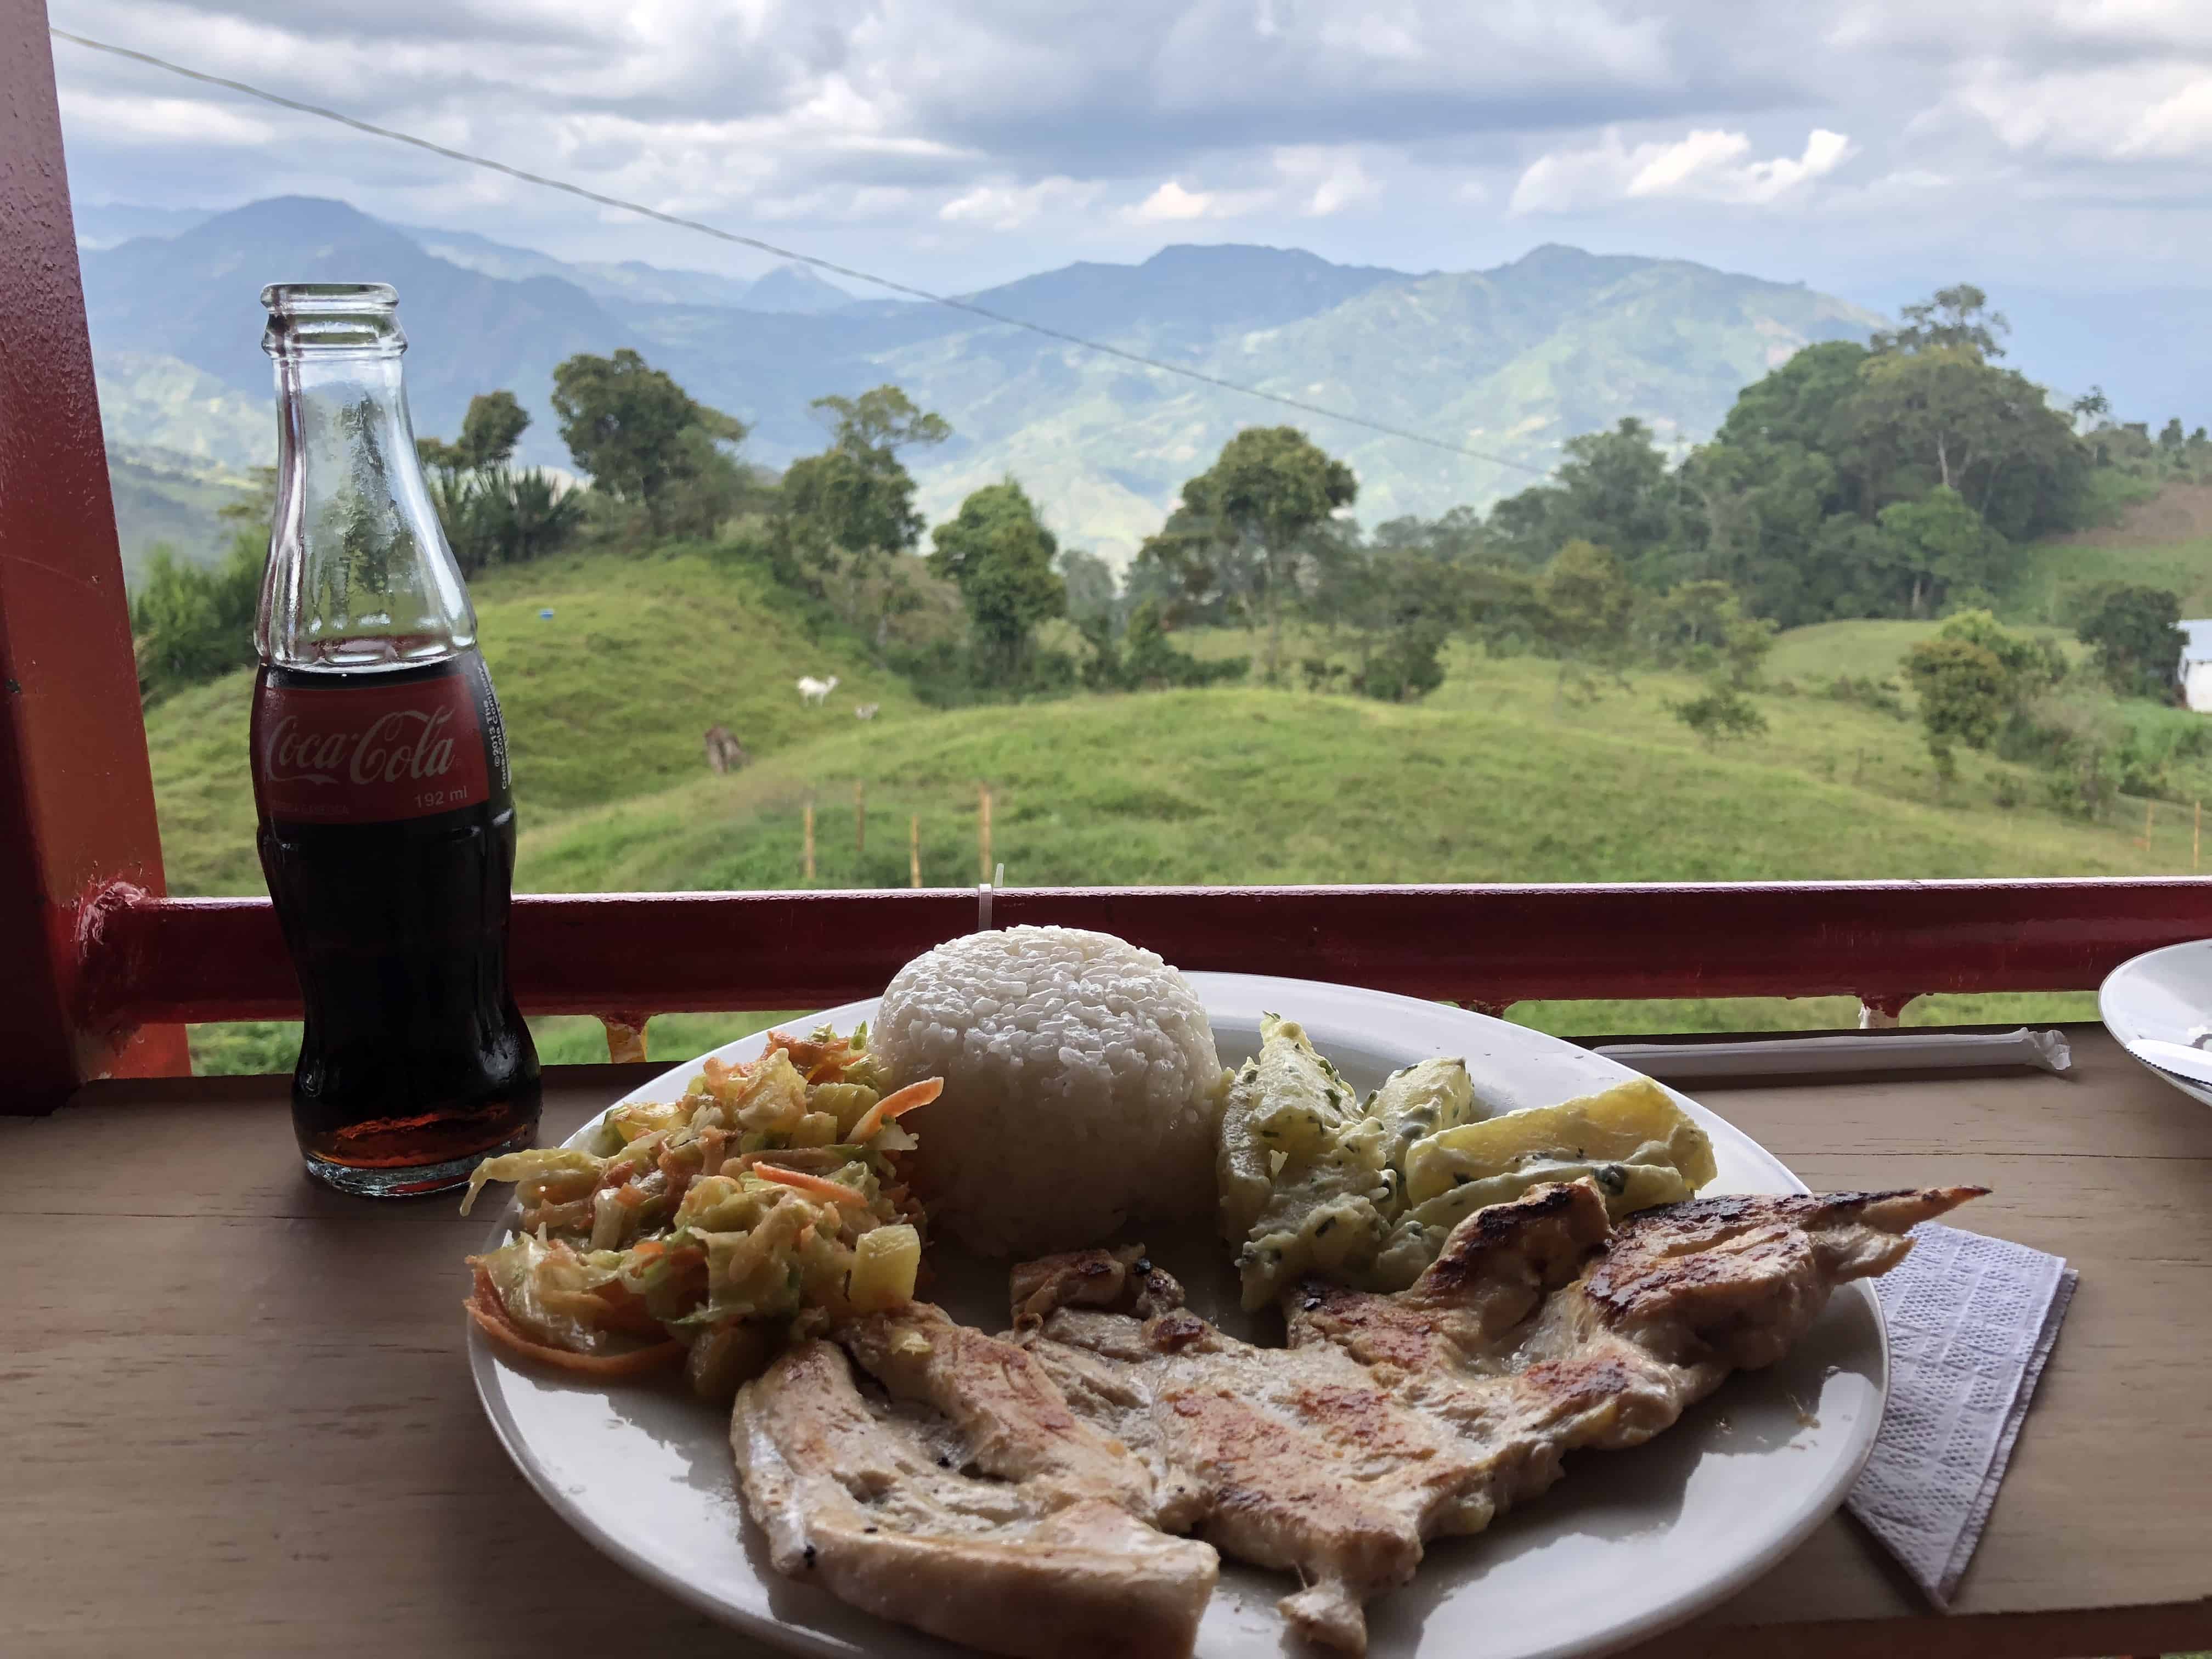 My meal with a view at El Mirador in Anserma, Caldas, Colombia